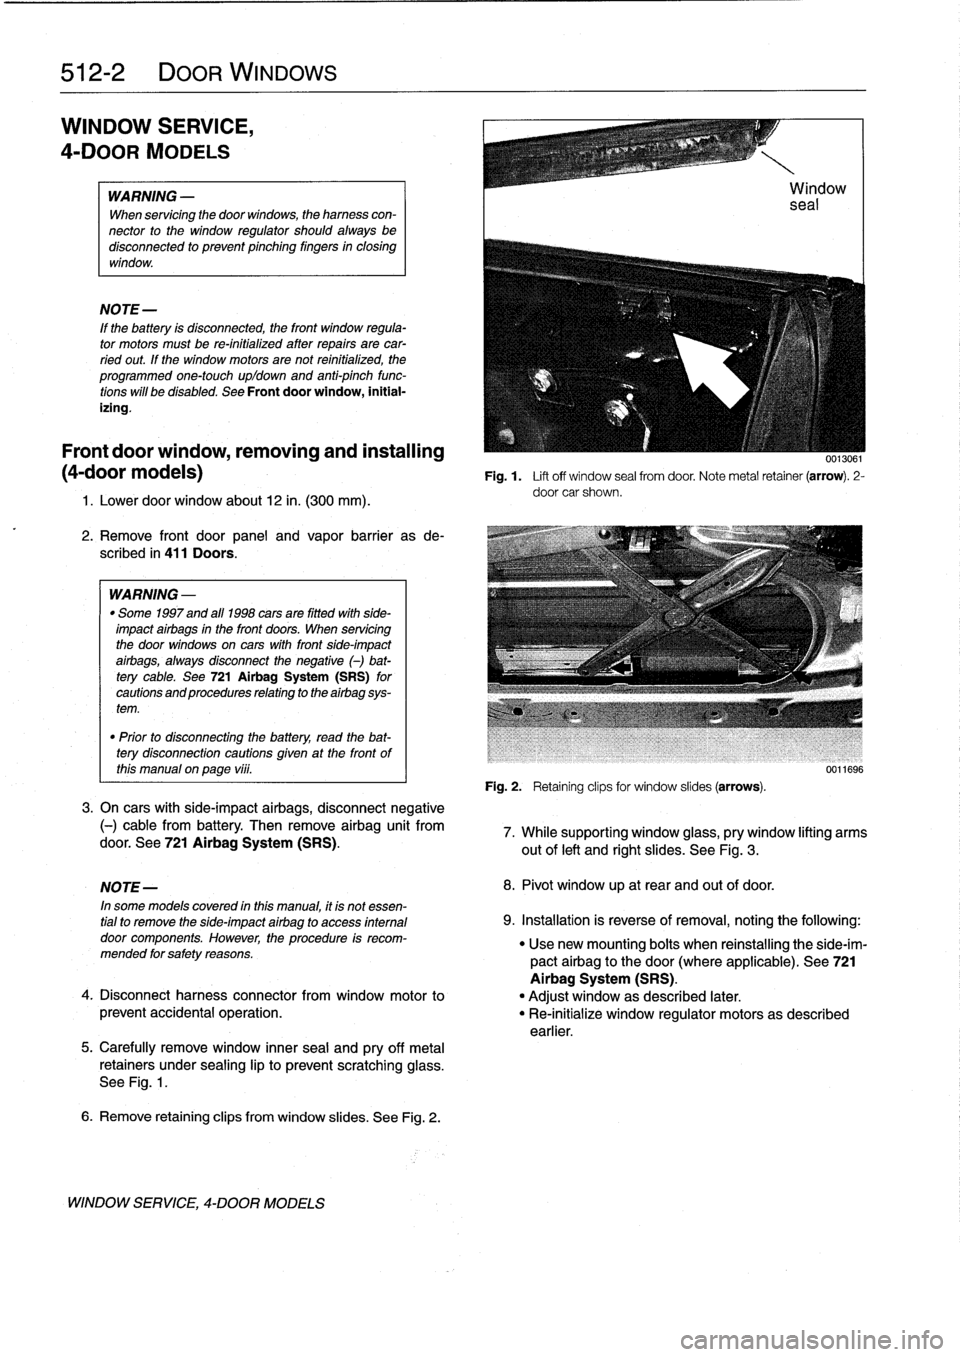 BMW 318i 1998 E36 Workshop Manual 
512-2

	

DOOR
WINDOWS

WINDOW
SERVICE,

4-DOOR
MODELS

WARNING
-

When
servicing
the
door
wíndows,
theharness
con-
nector
to
the
window
regulator
shouldalways
be
disconnected
to
prevent
pinching
fi